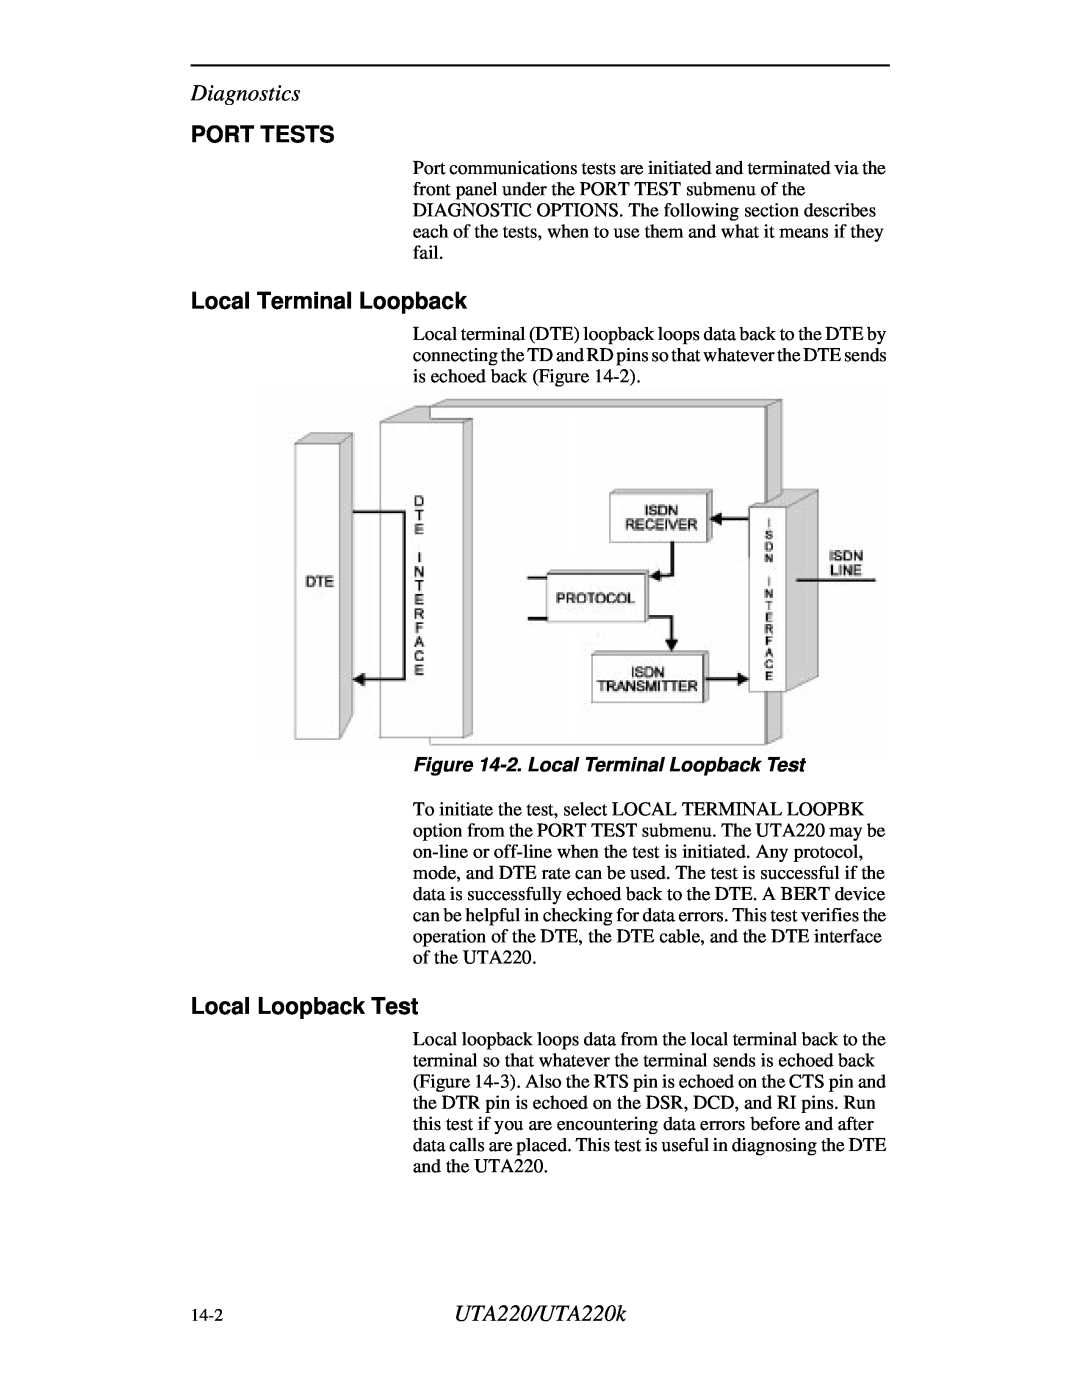 Northern UTA220/UTA220k manual Port Tests, Local Loopback Test, 2. Local Terminal Loopback Test, Diagnostics 